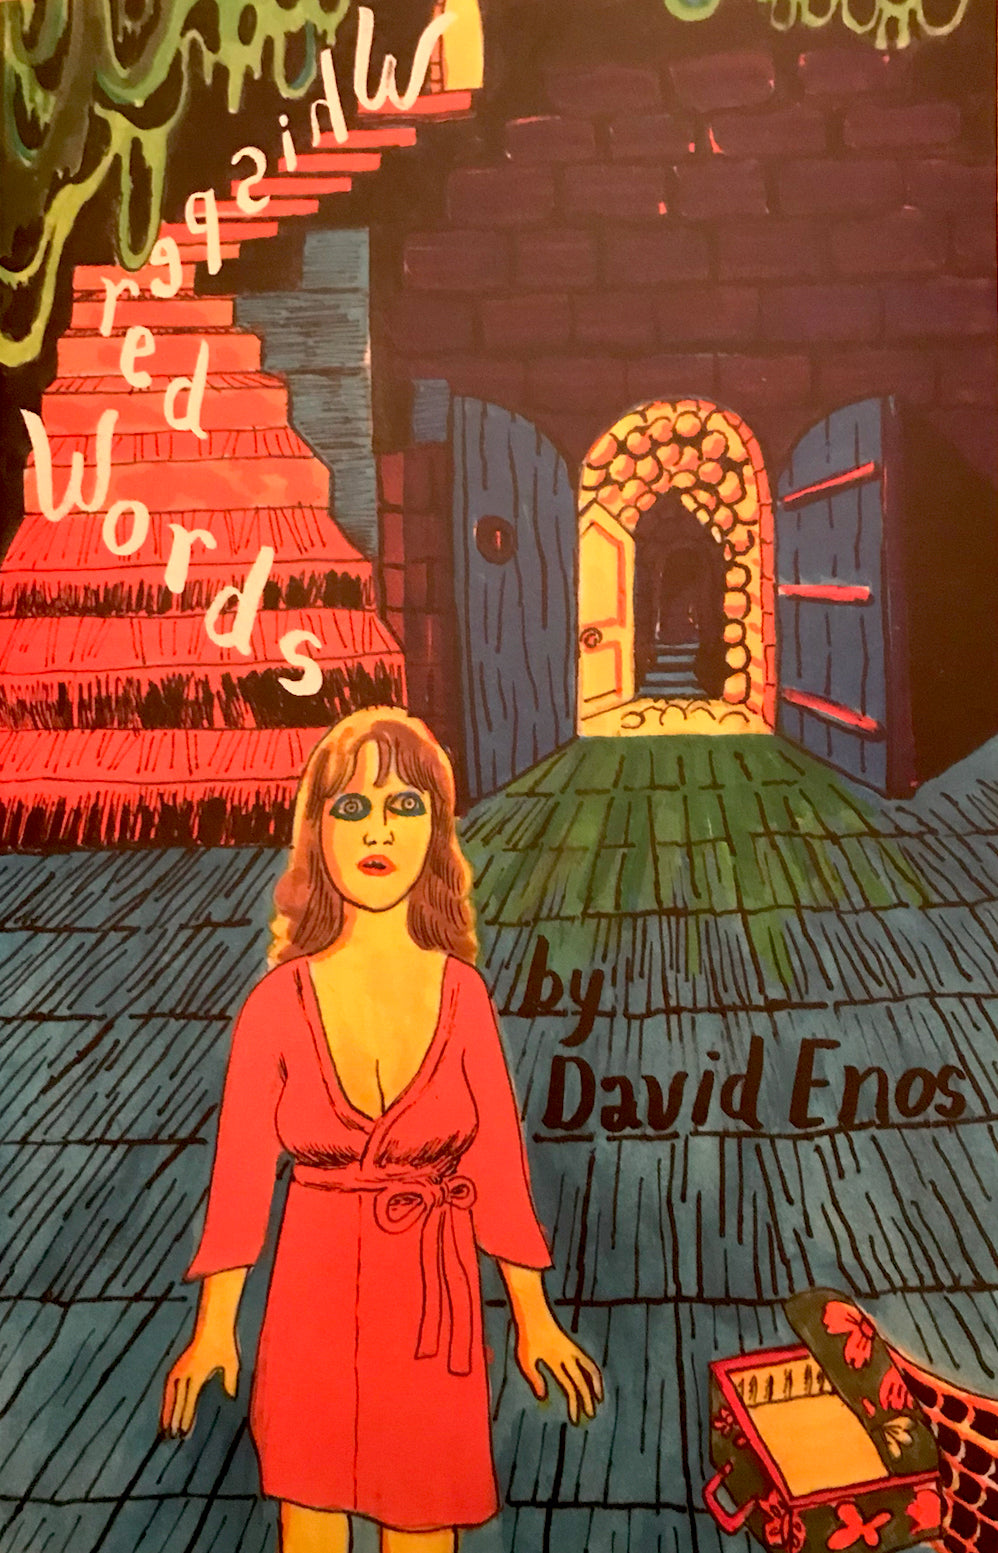 David Enos - Whispered Words